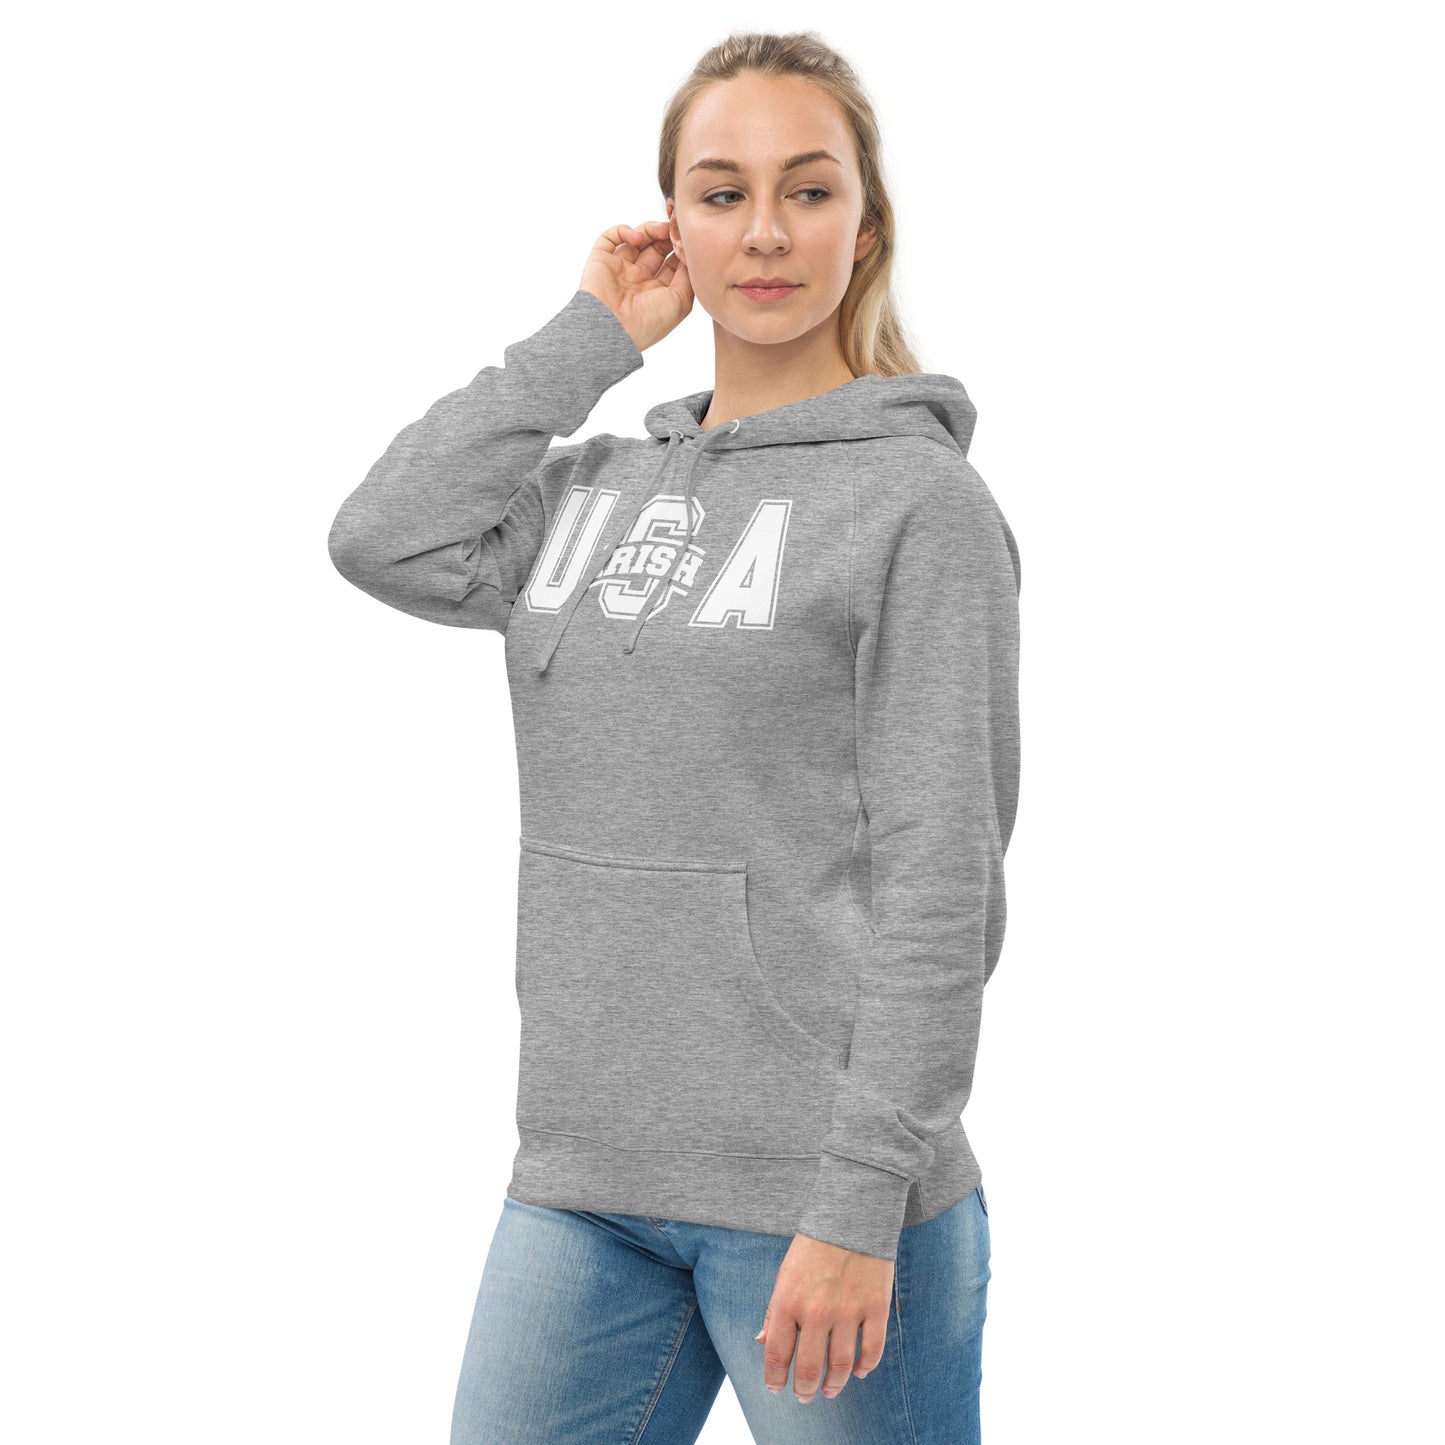 USA_Scioto logo (substitute)-Unisex kangaroo pocket hoodie